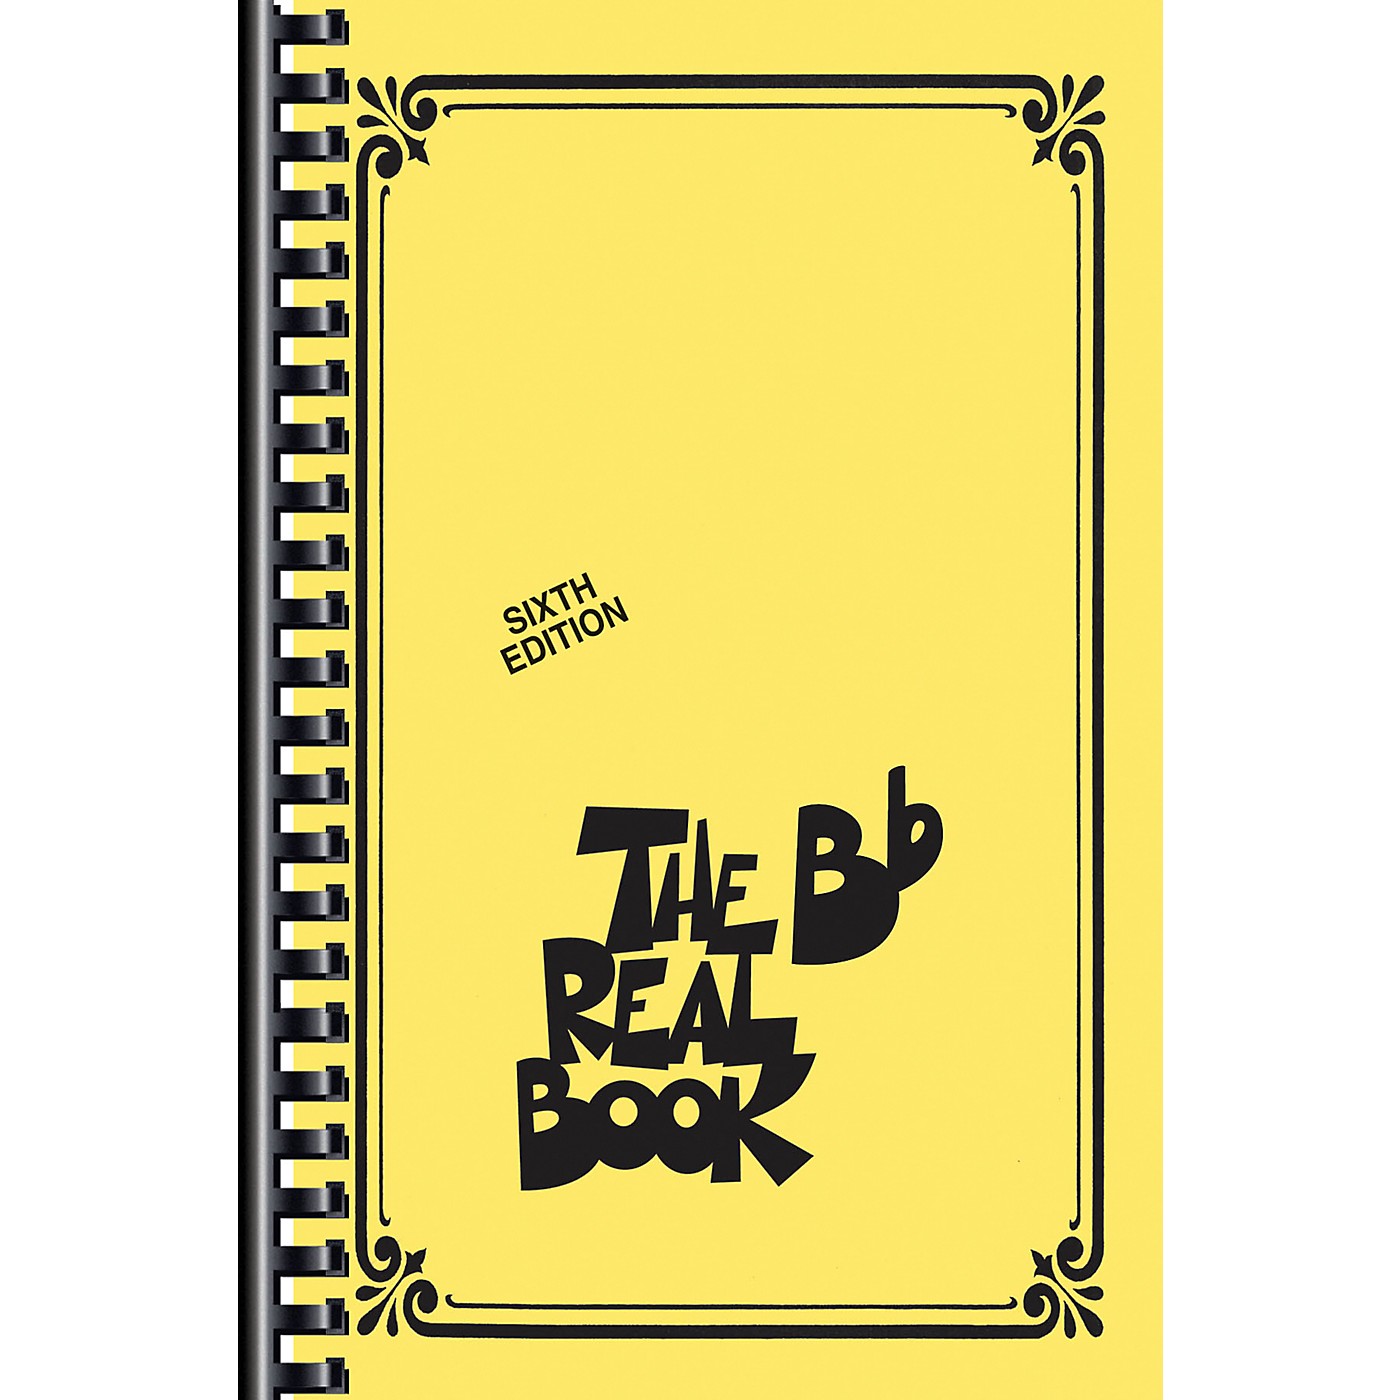 Hal Leonard The Bb Real Book - Sixth Edition (Mini Size) thumbnail